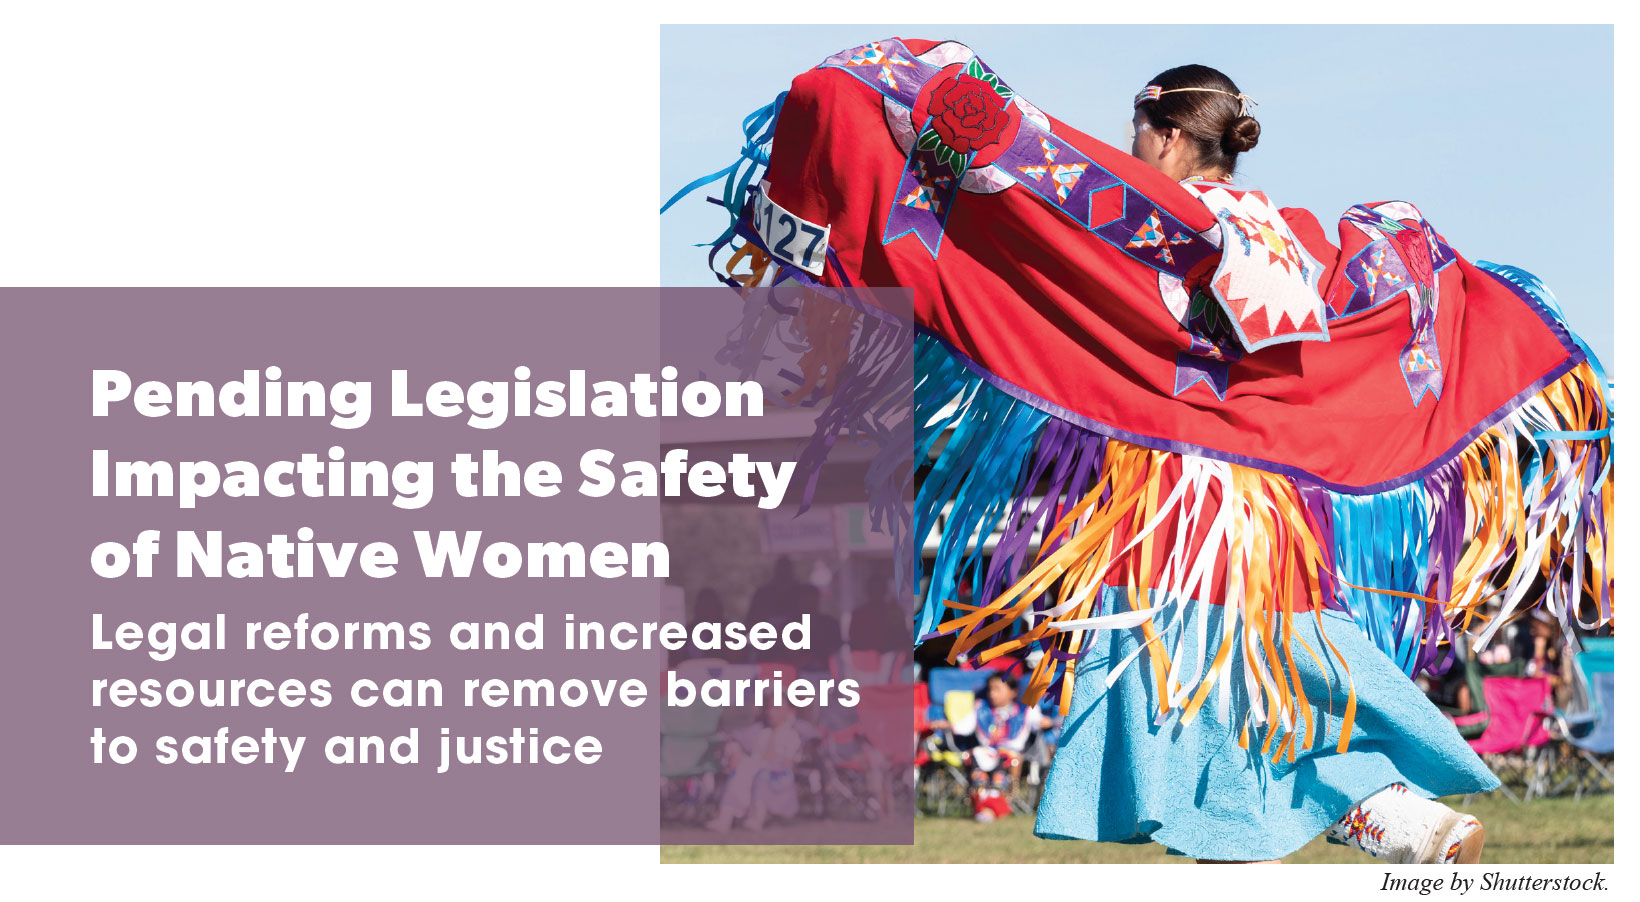 Pending Legislation Impacting the Safety of Native Women